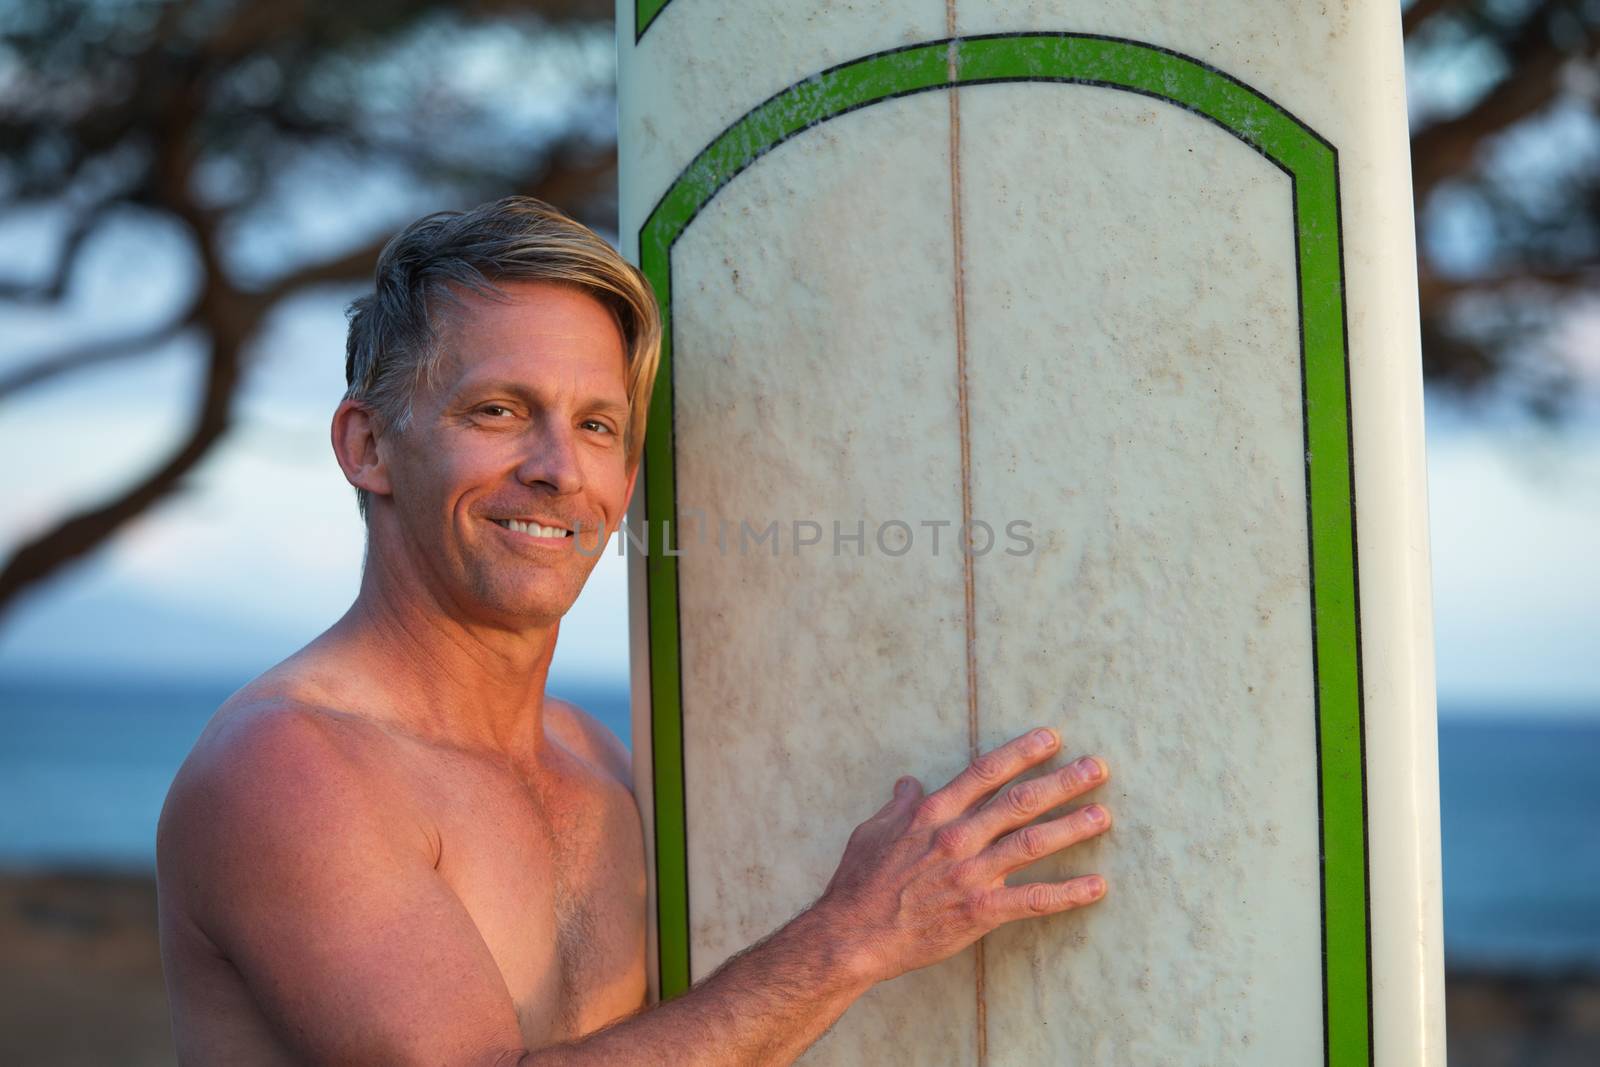 Hopeful single adult outdoors holding a surfboard